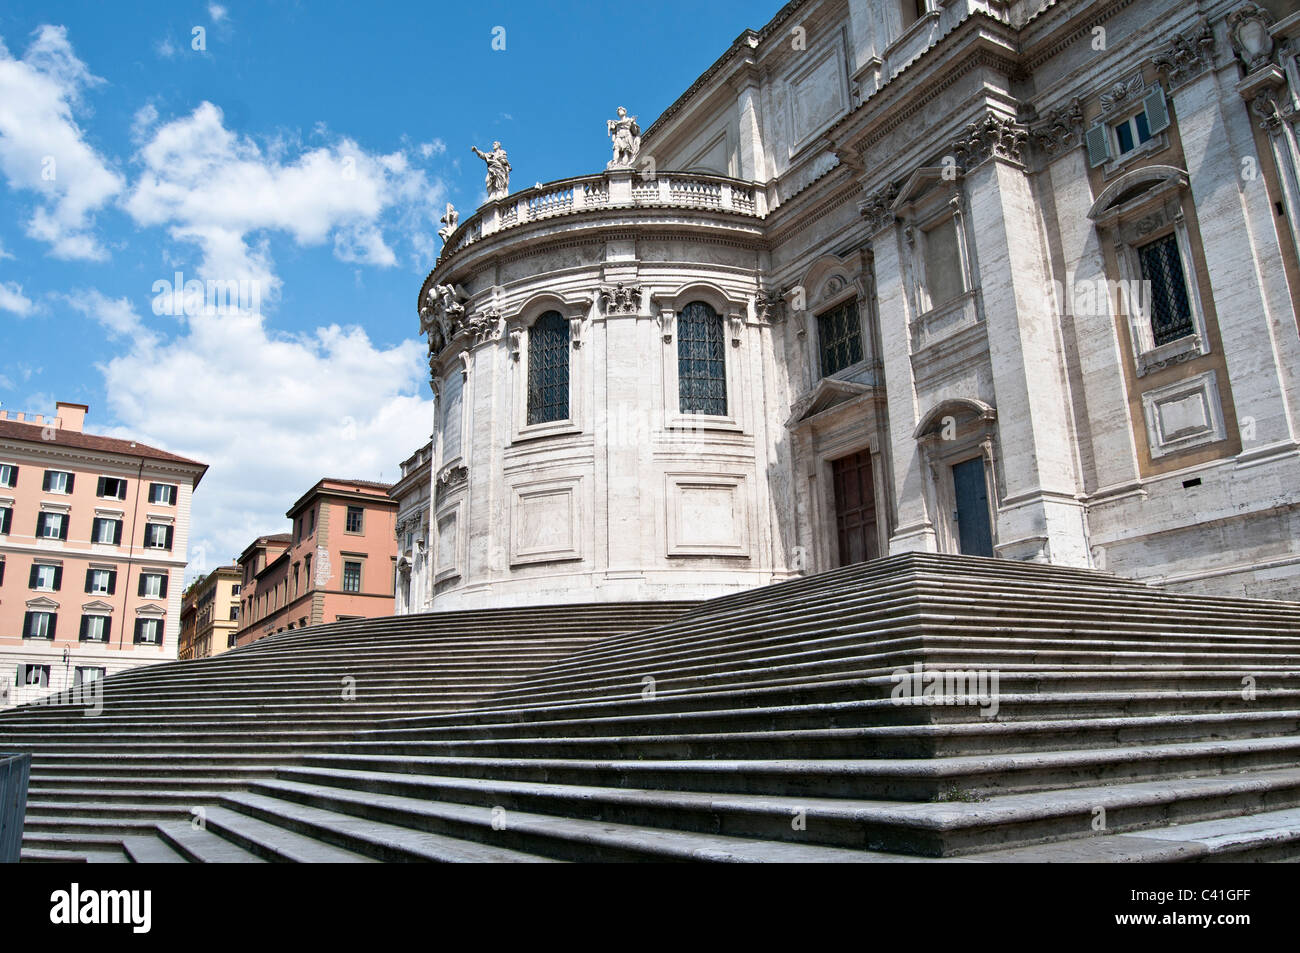 Exterior of the Santa Maria Maggiore basilica- Rome Italy Stock Photo